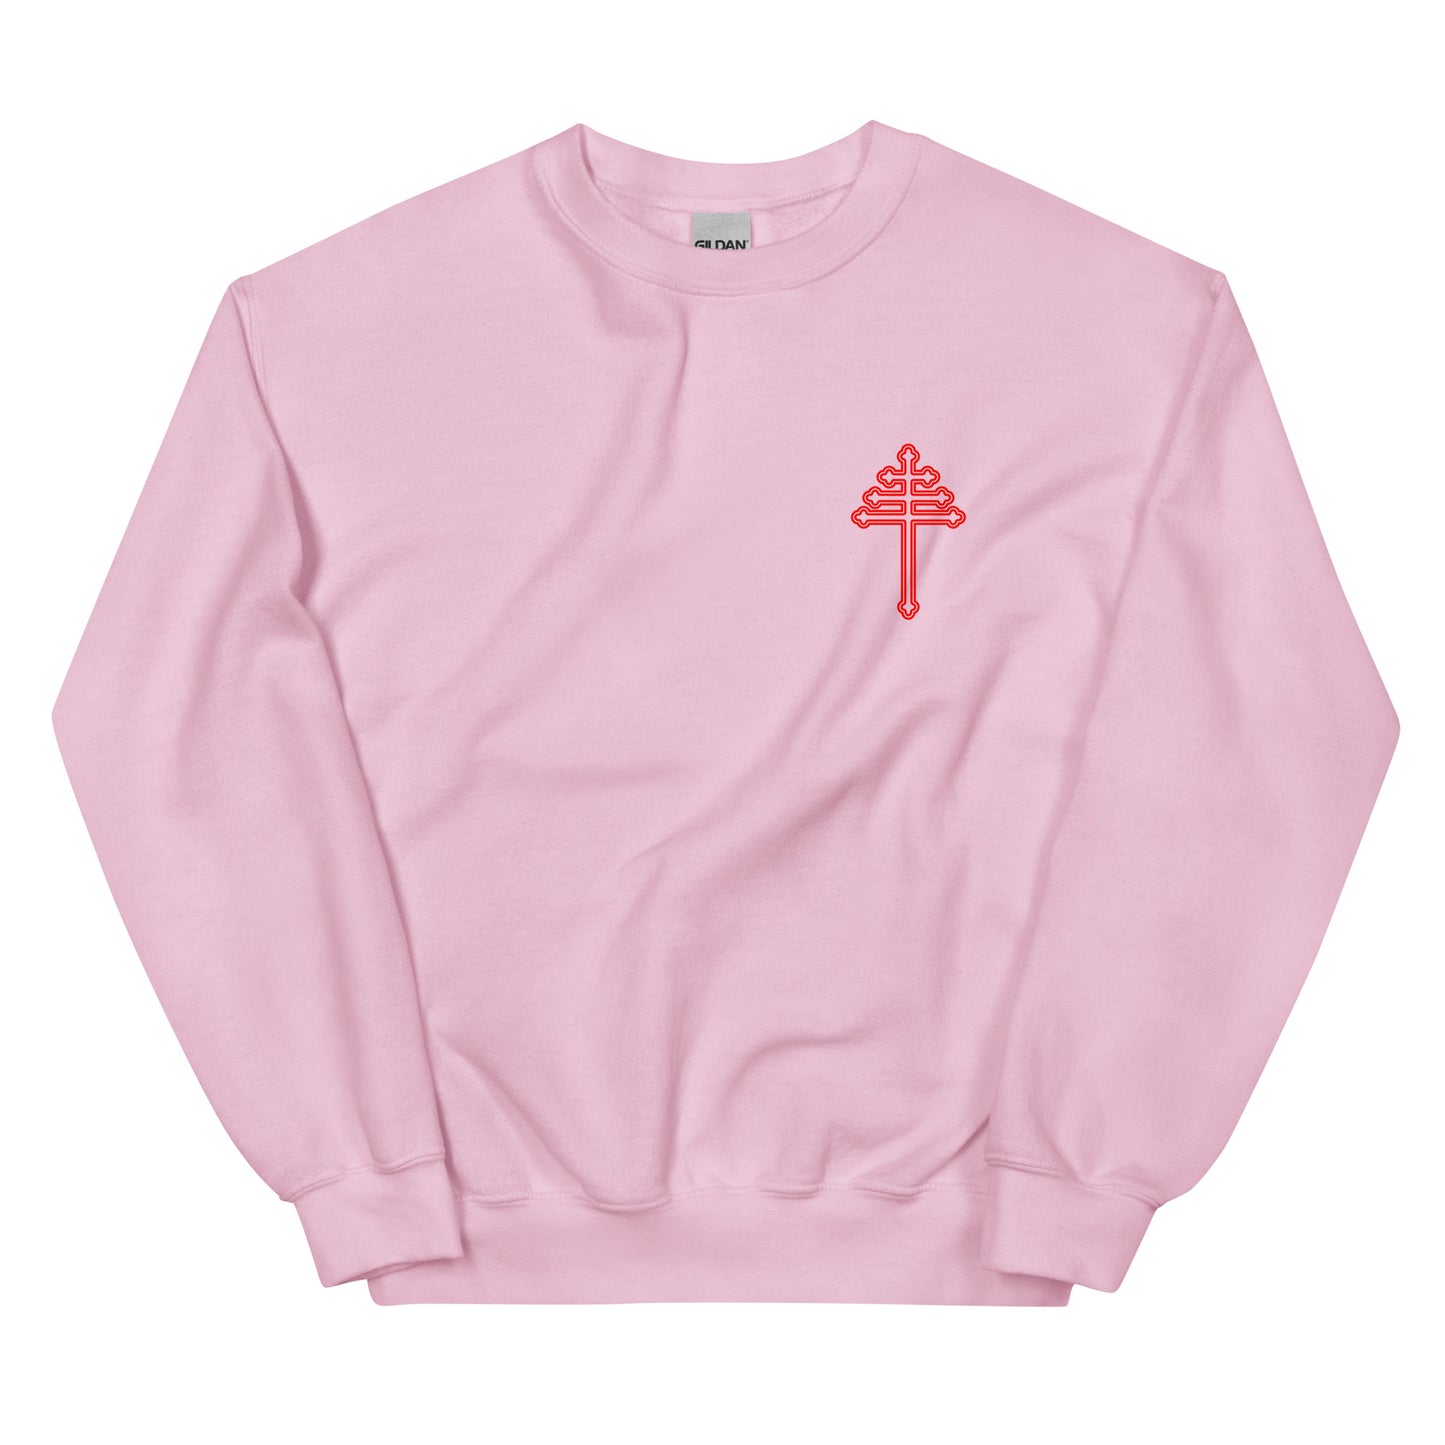 Maronite Cross - Saint Charbel Sweatshirt